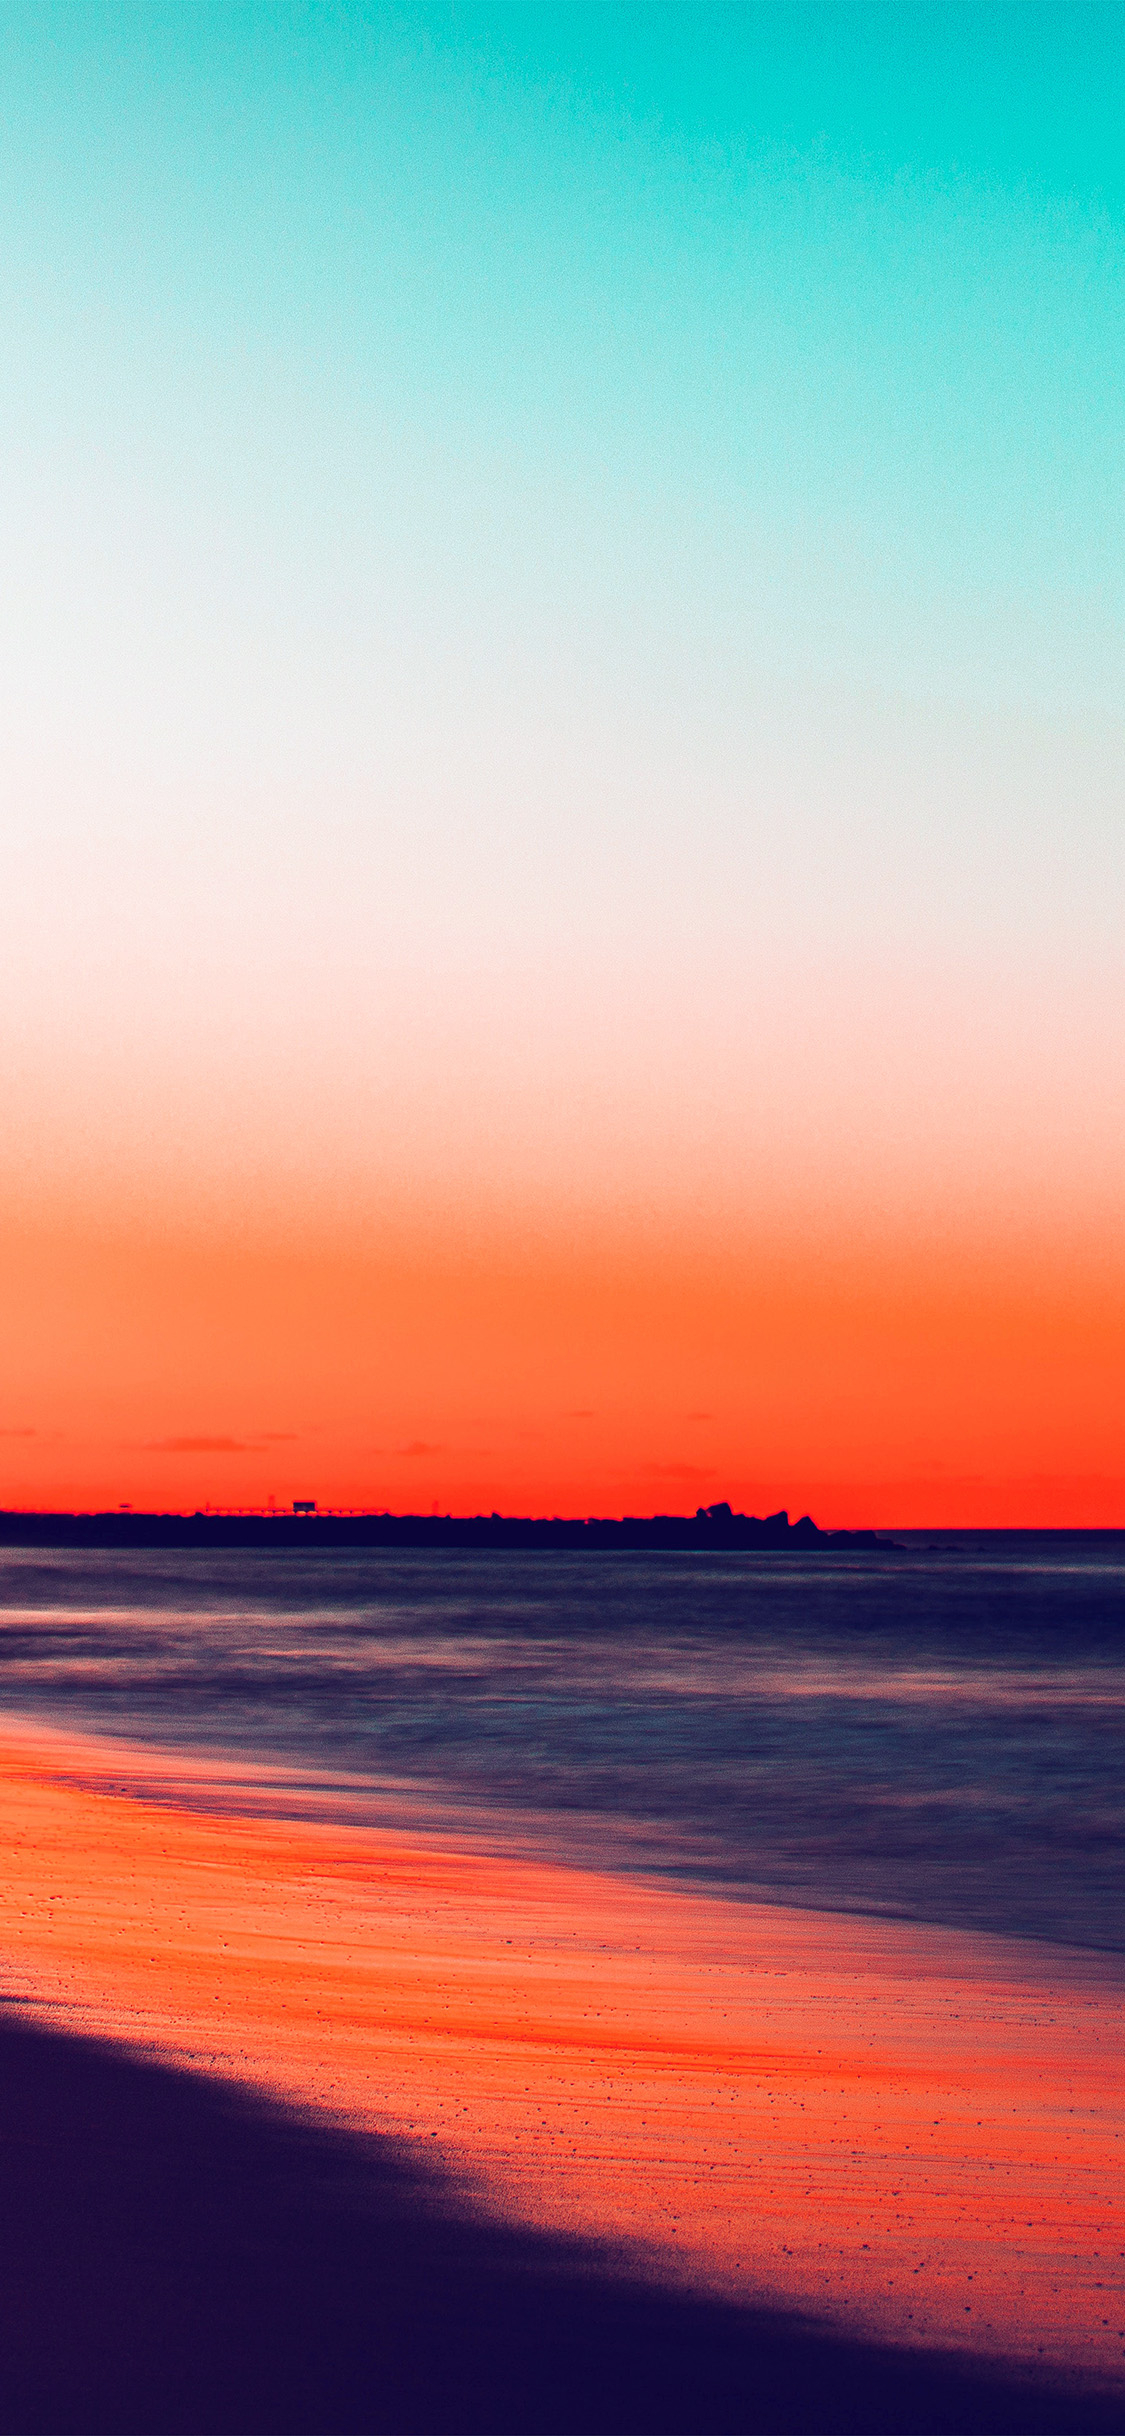 1125x2436 | iPhone X wallpaper | nu78-sunset-beachfall-night-sea-nature-red